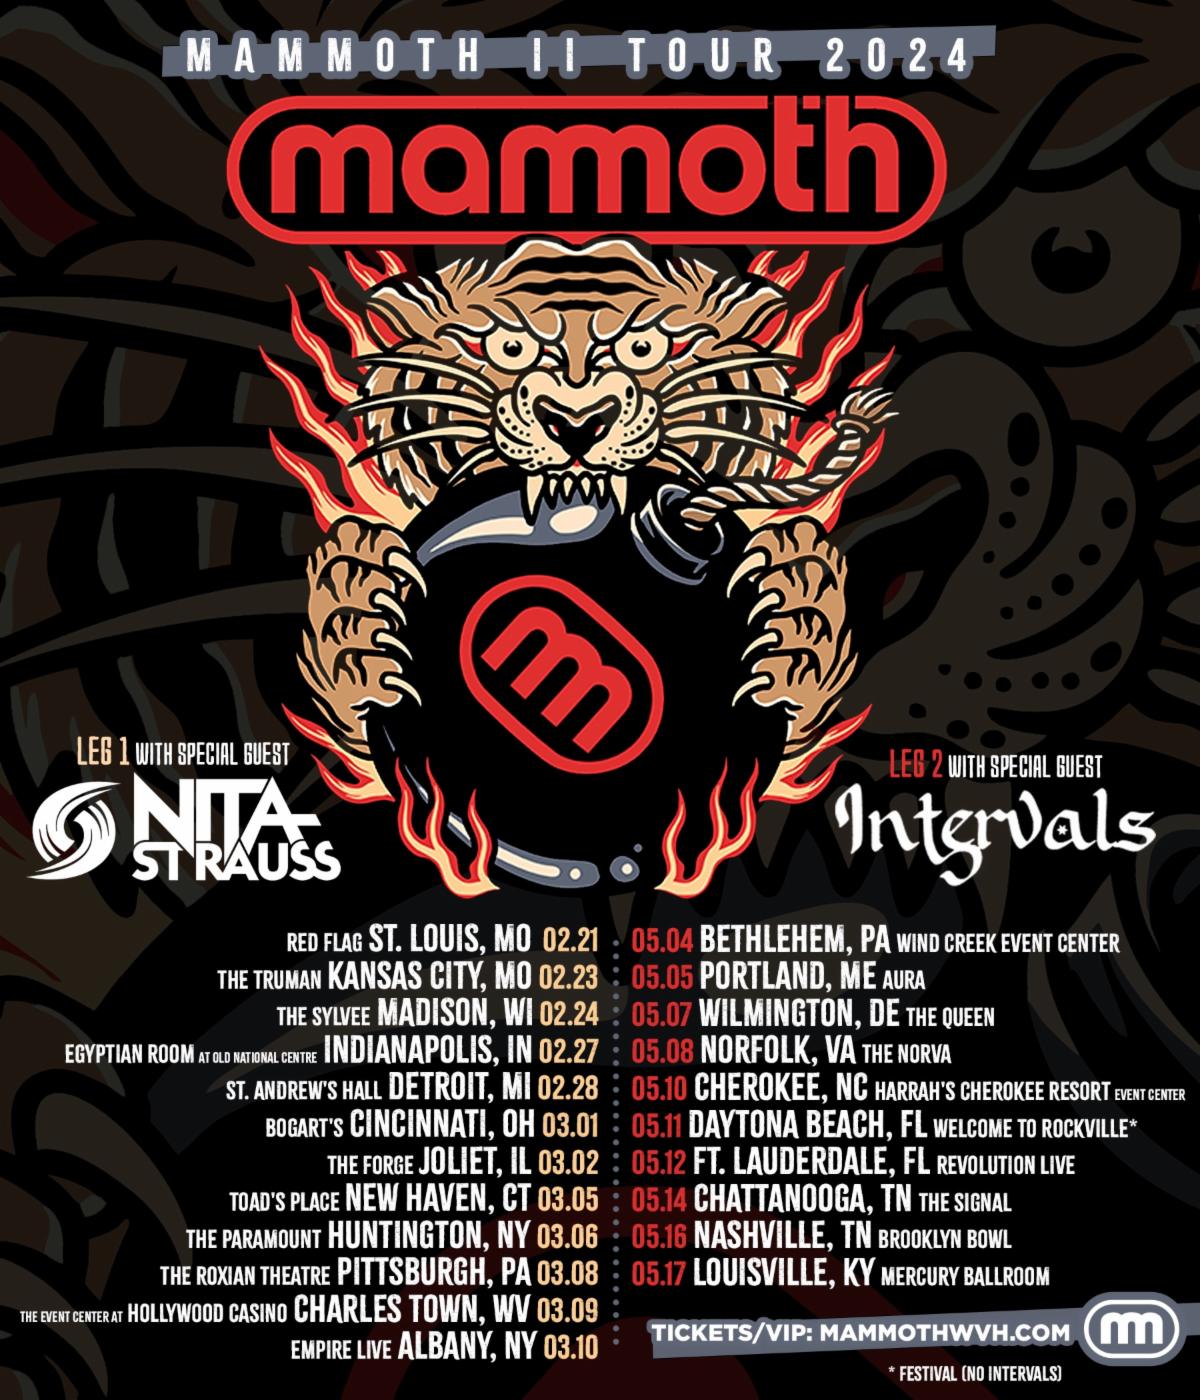 Wolfgang Van Halen’s MAMMOTH WVH Announces 'MAMMOTH II TOUR 2024' Headline Dates